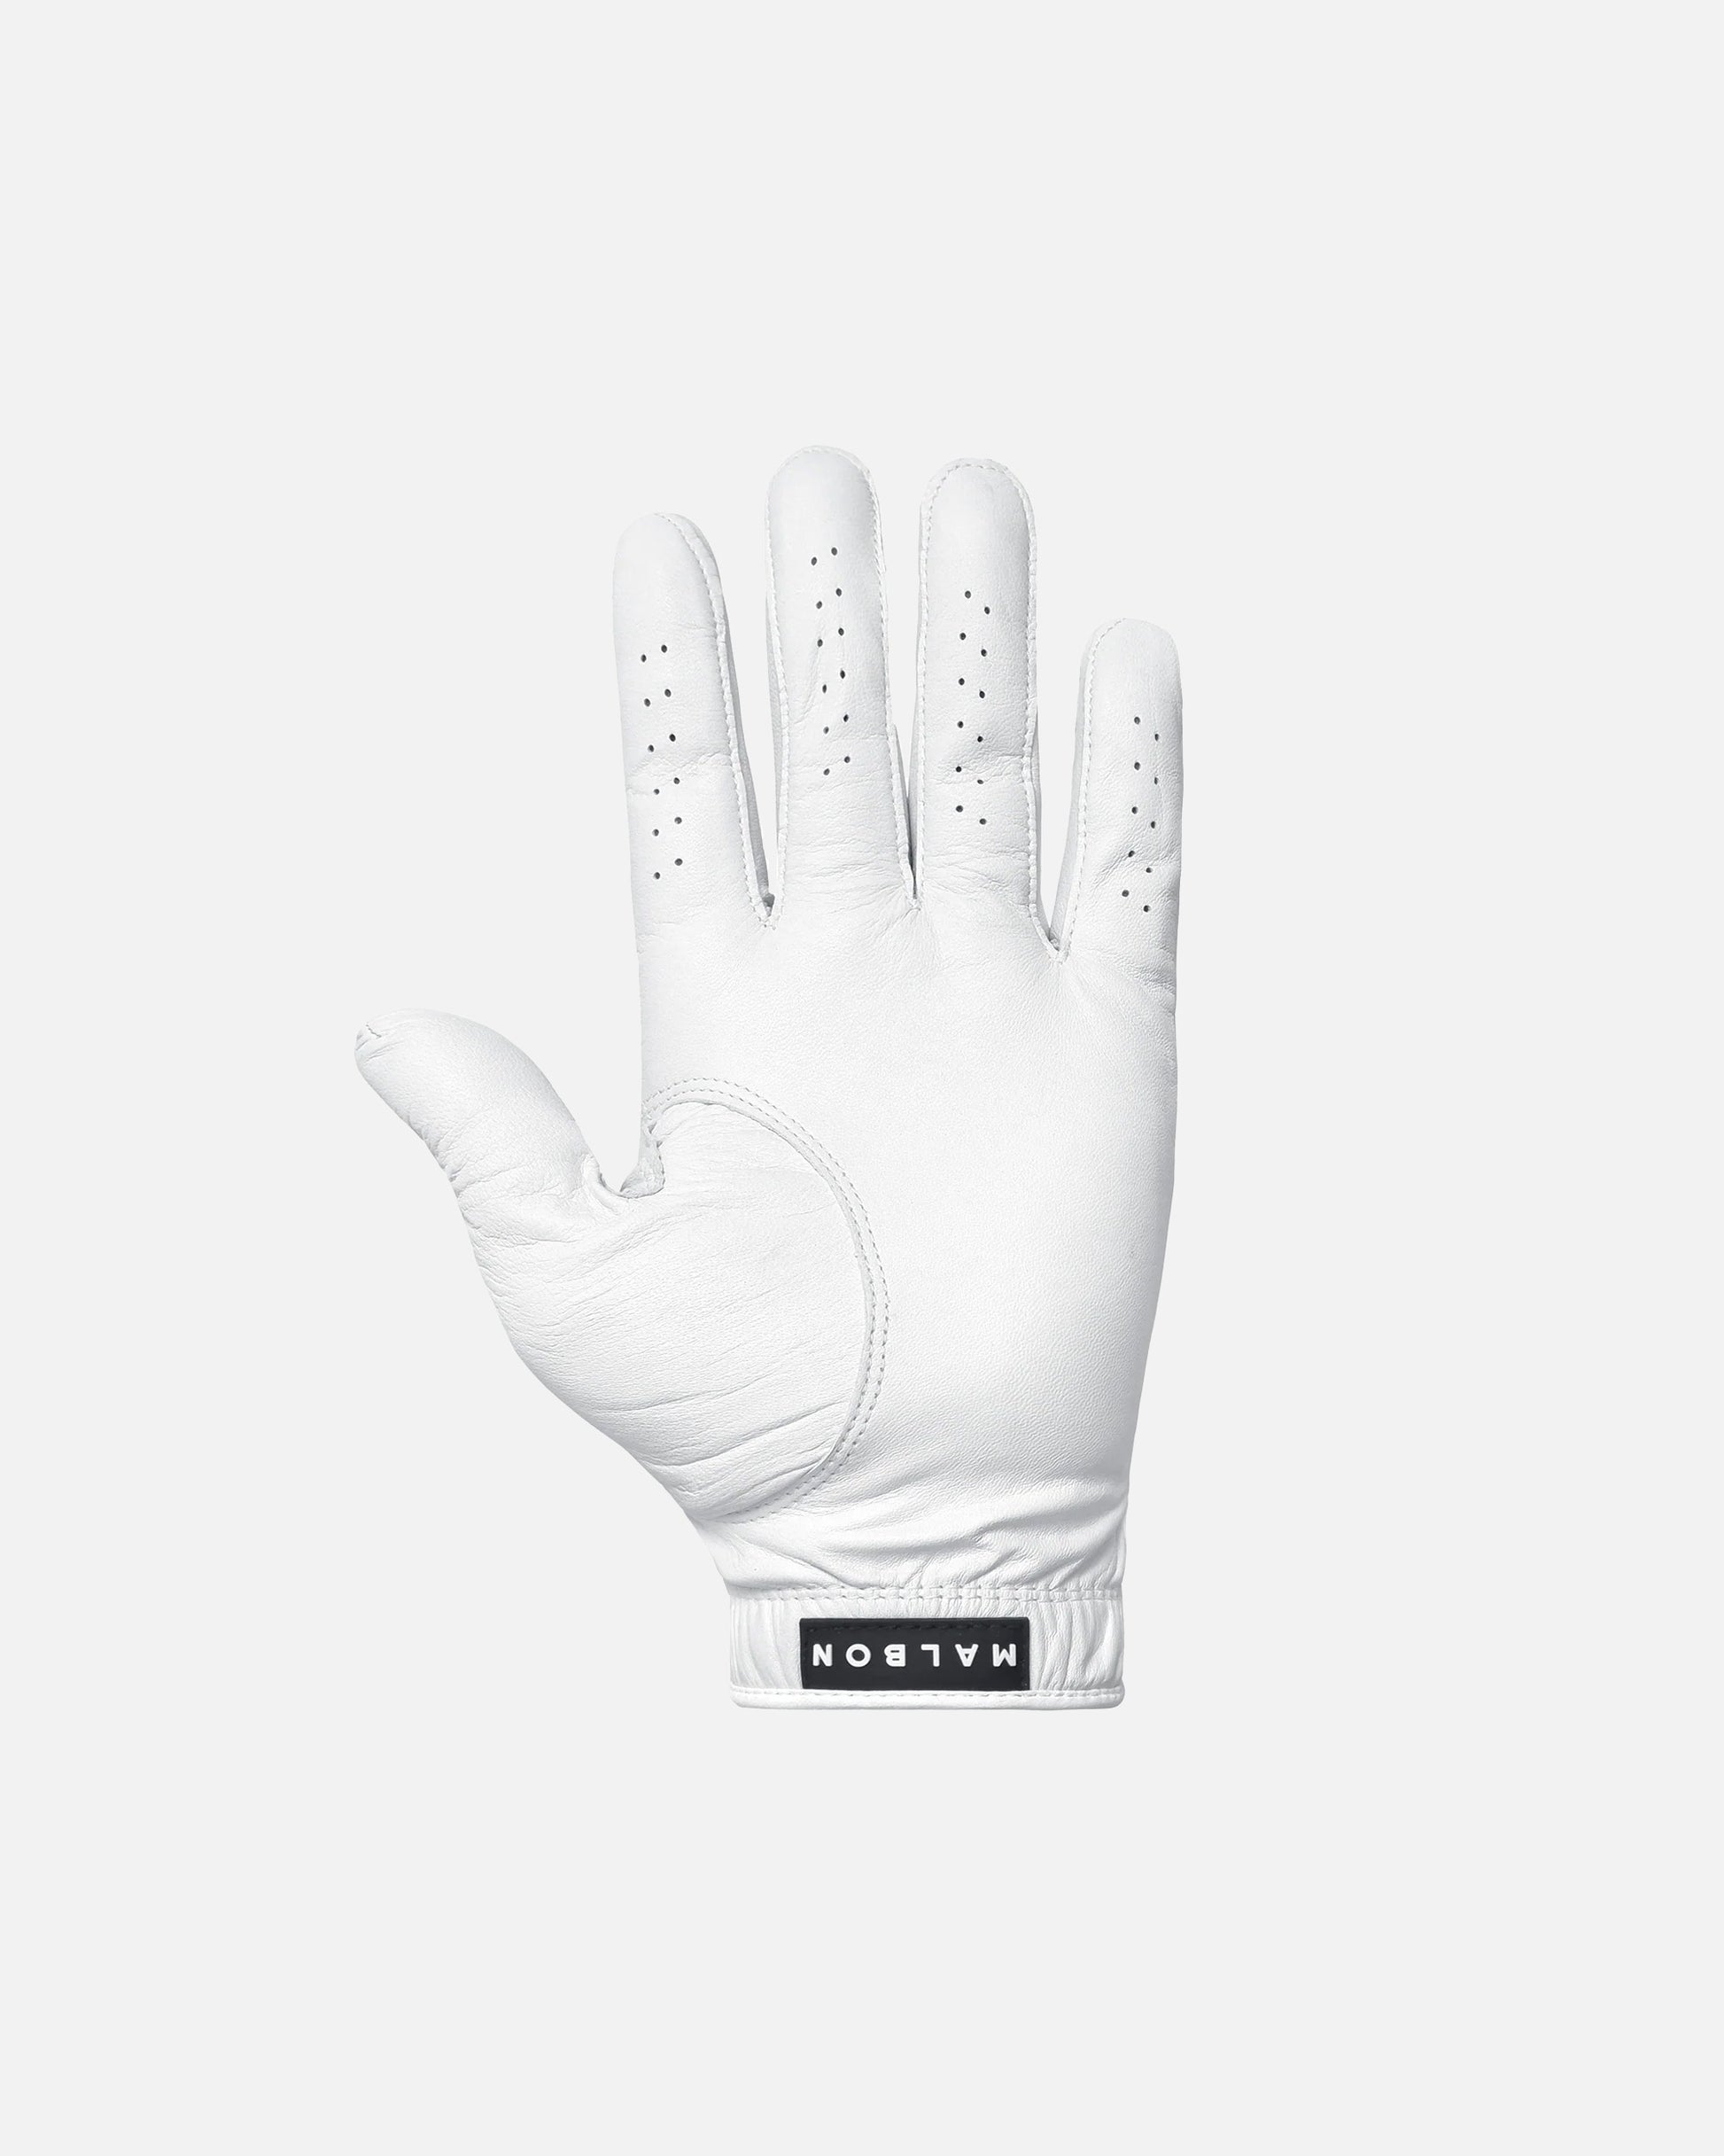 Malbon Golf Ivy Flagseeker Glove Ivory – The Decorum Bangkok